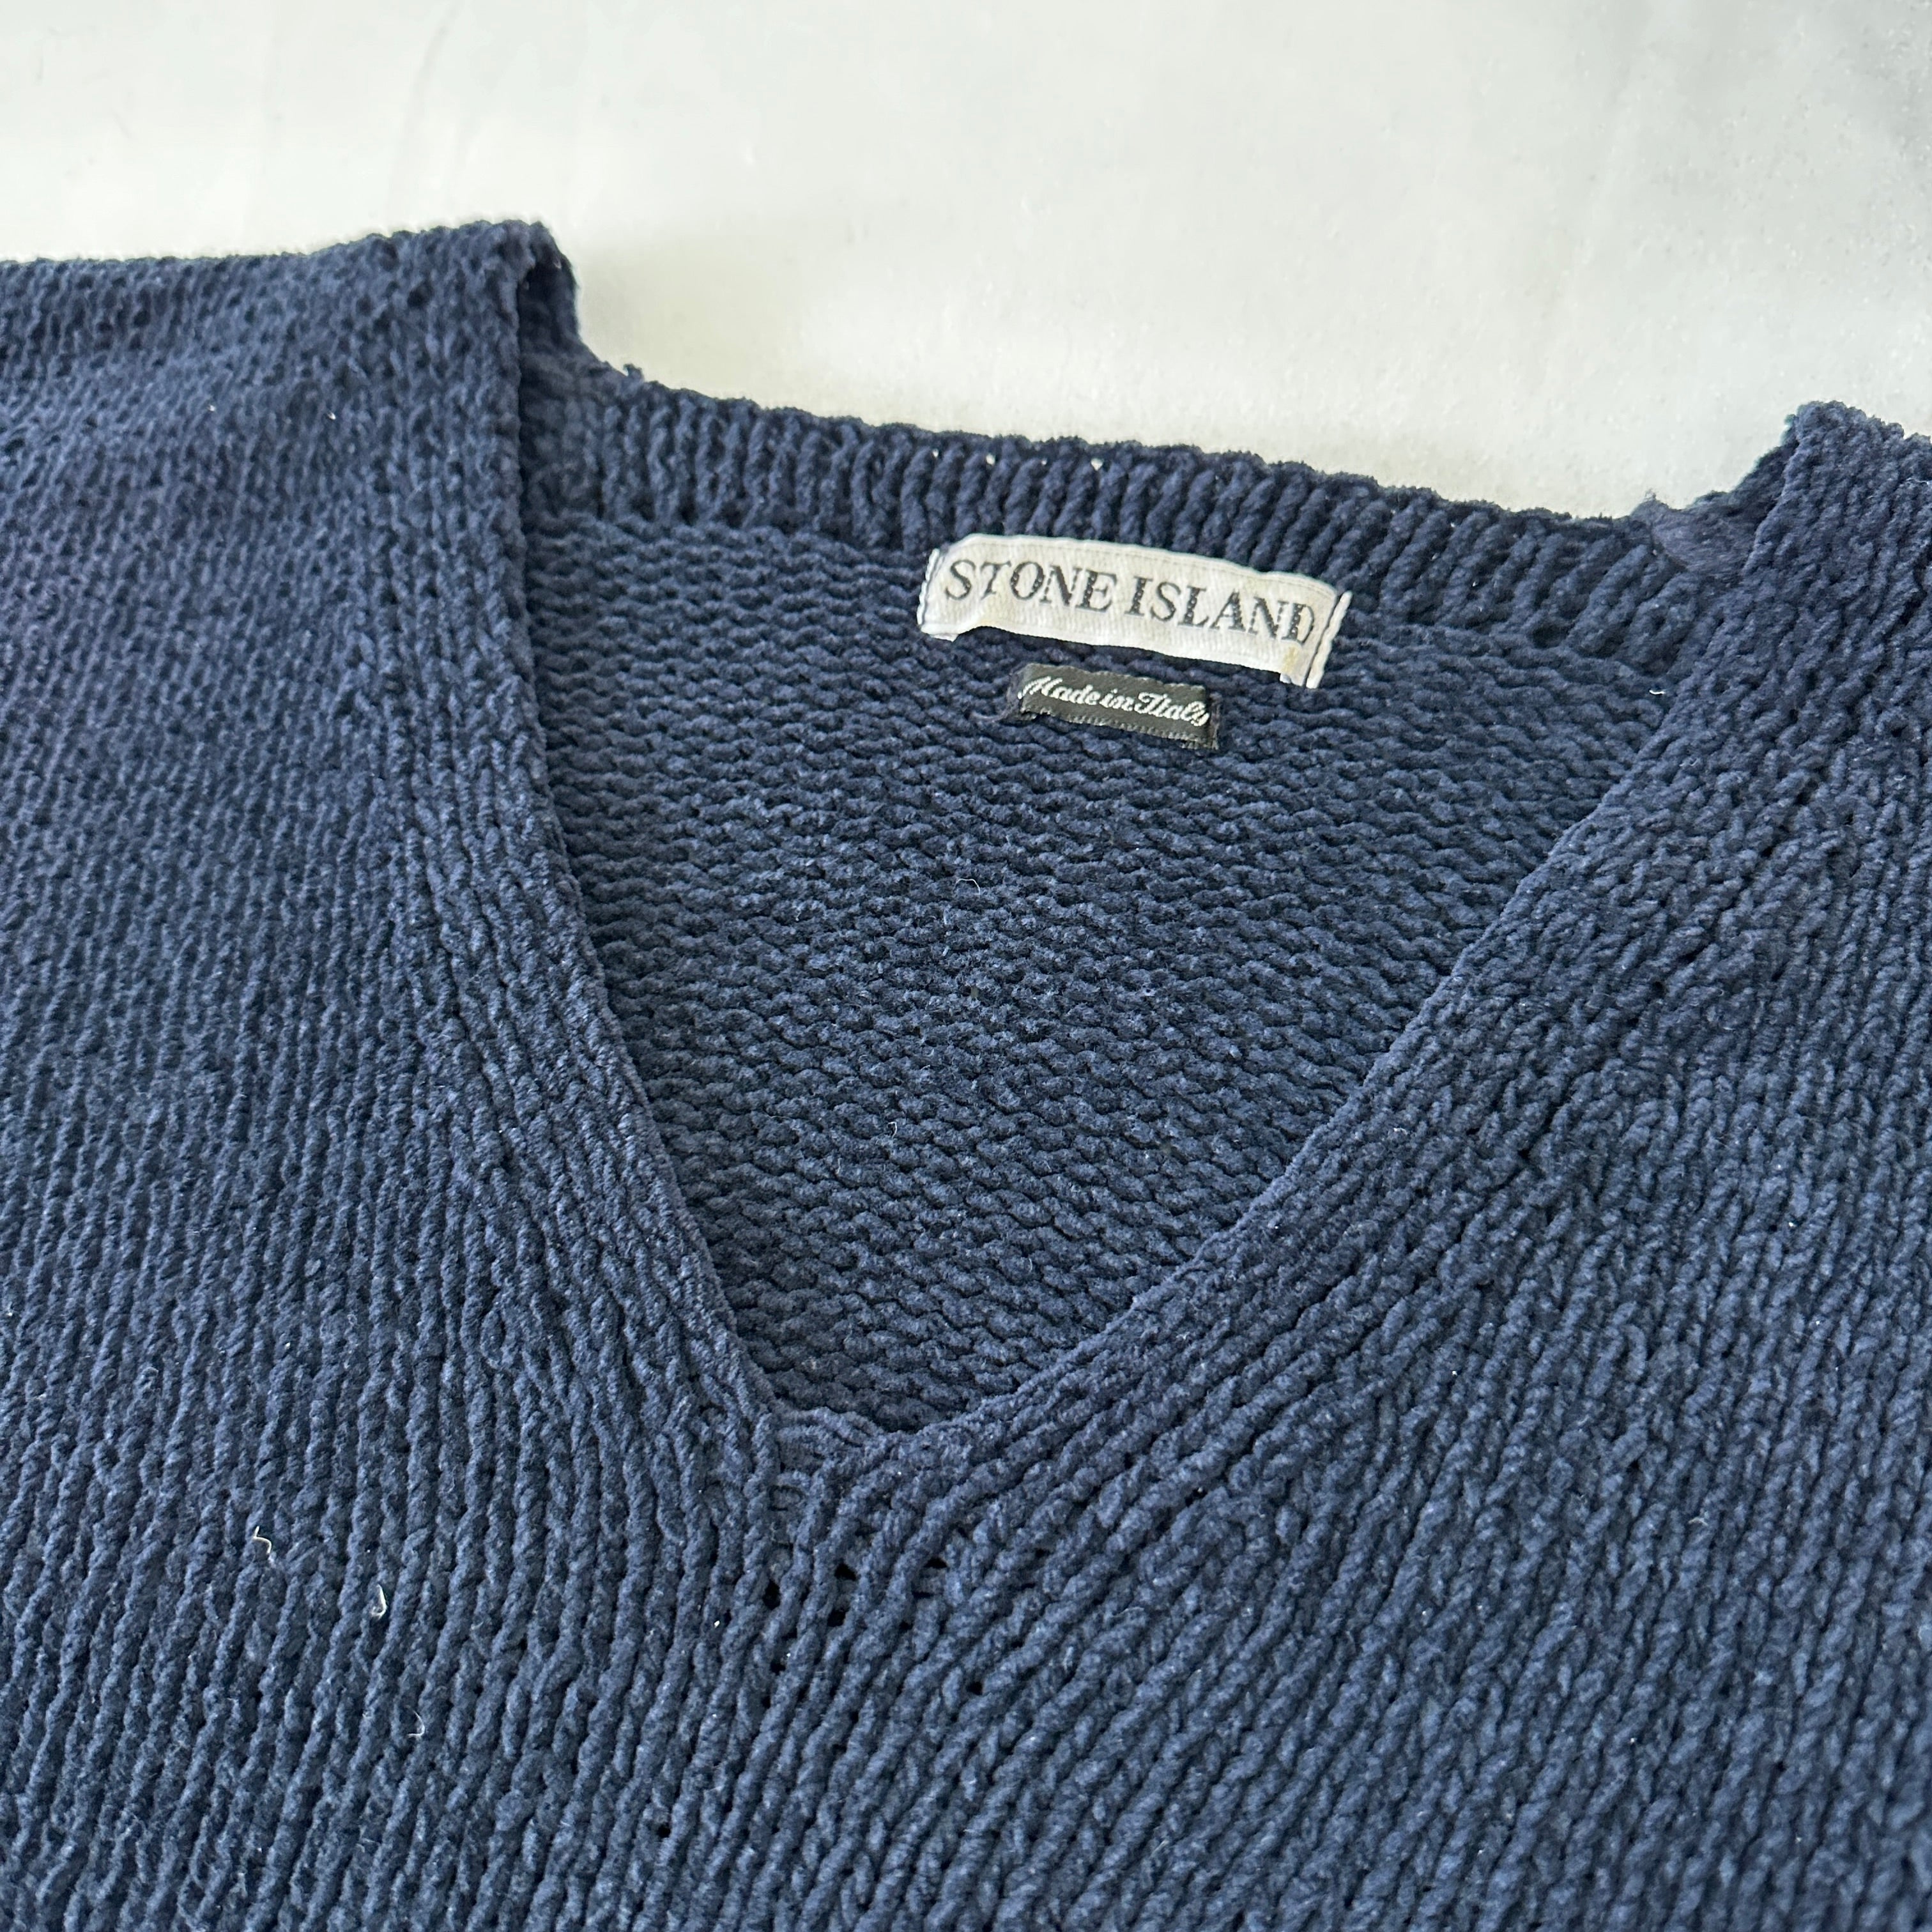 Stone Island 1997 Vintage Chenille V-Neck Cotton Knit Sweater - M 